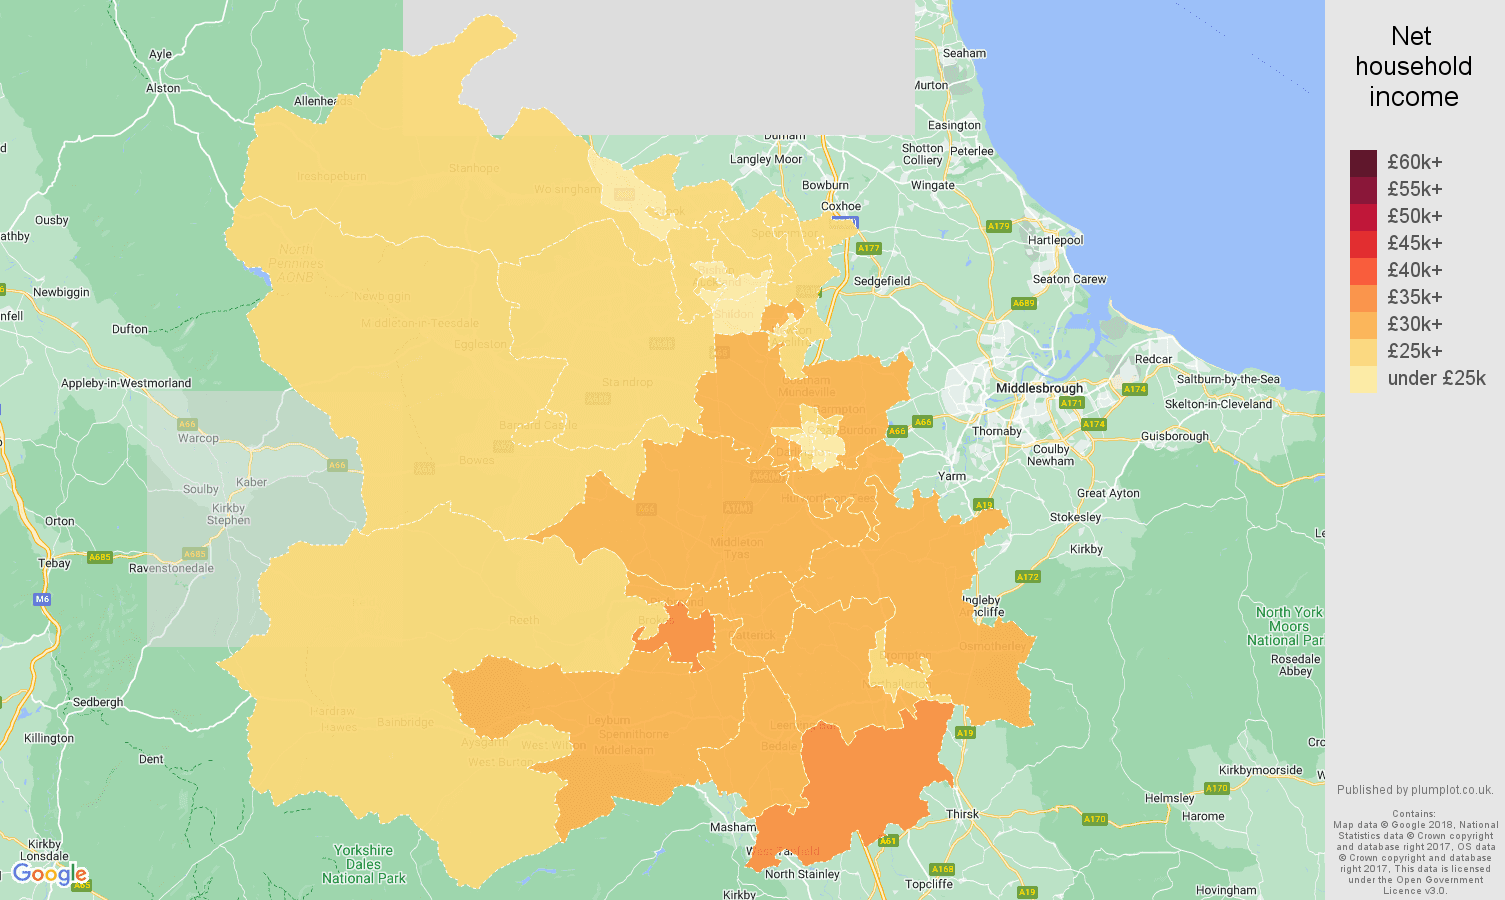 Darlington net household income map